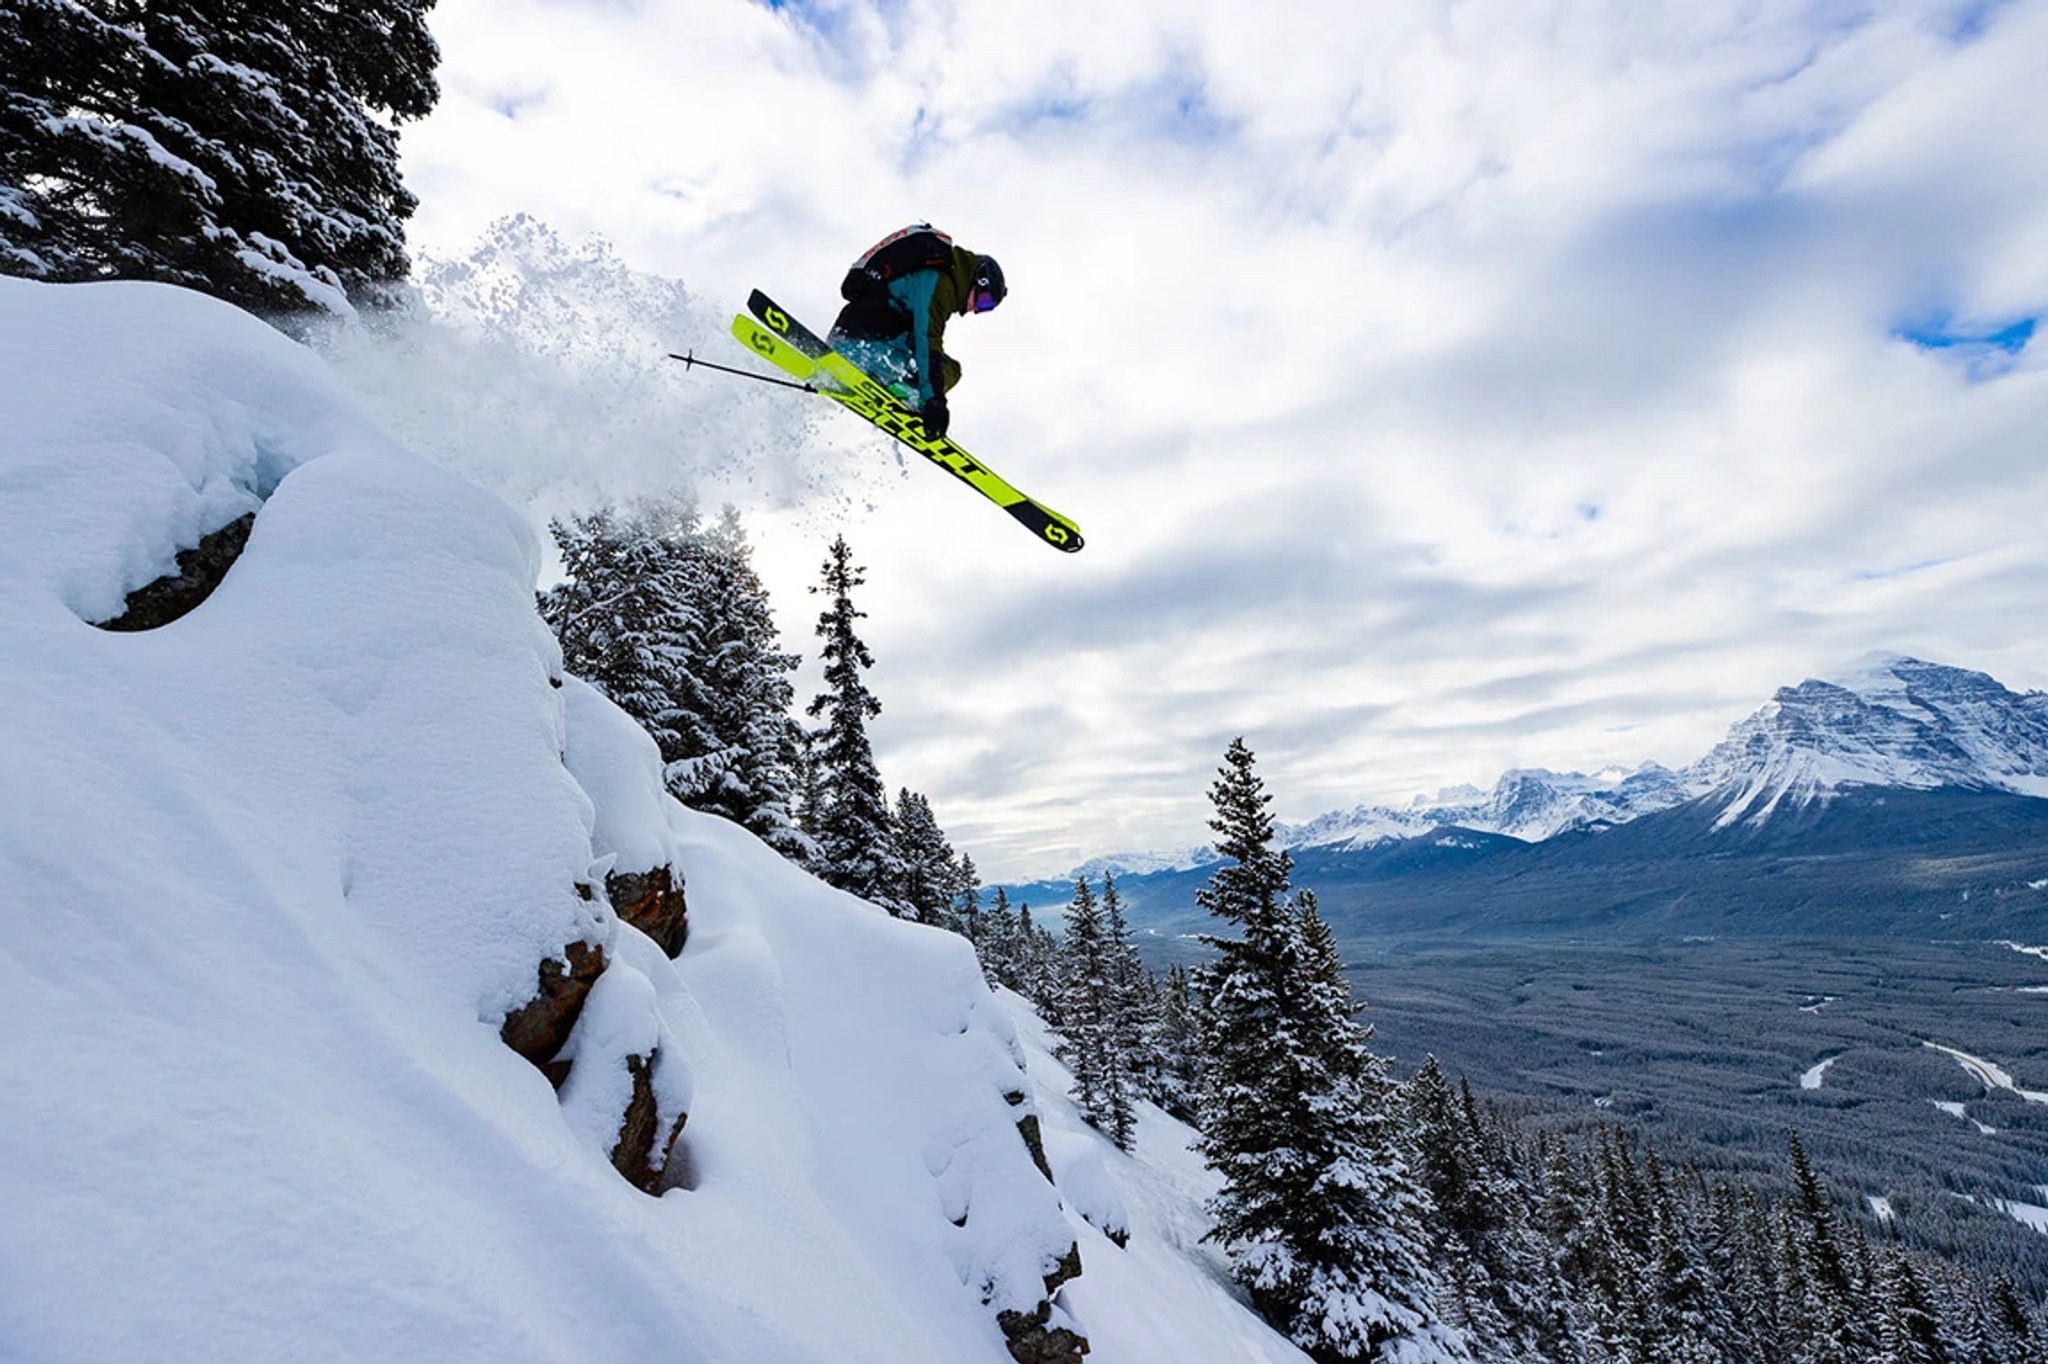 skier in mid-air